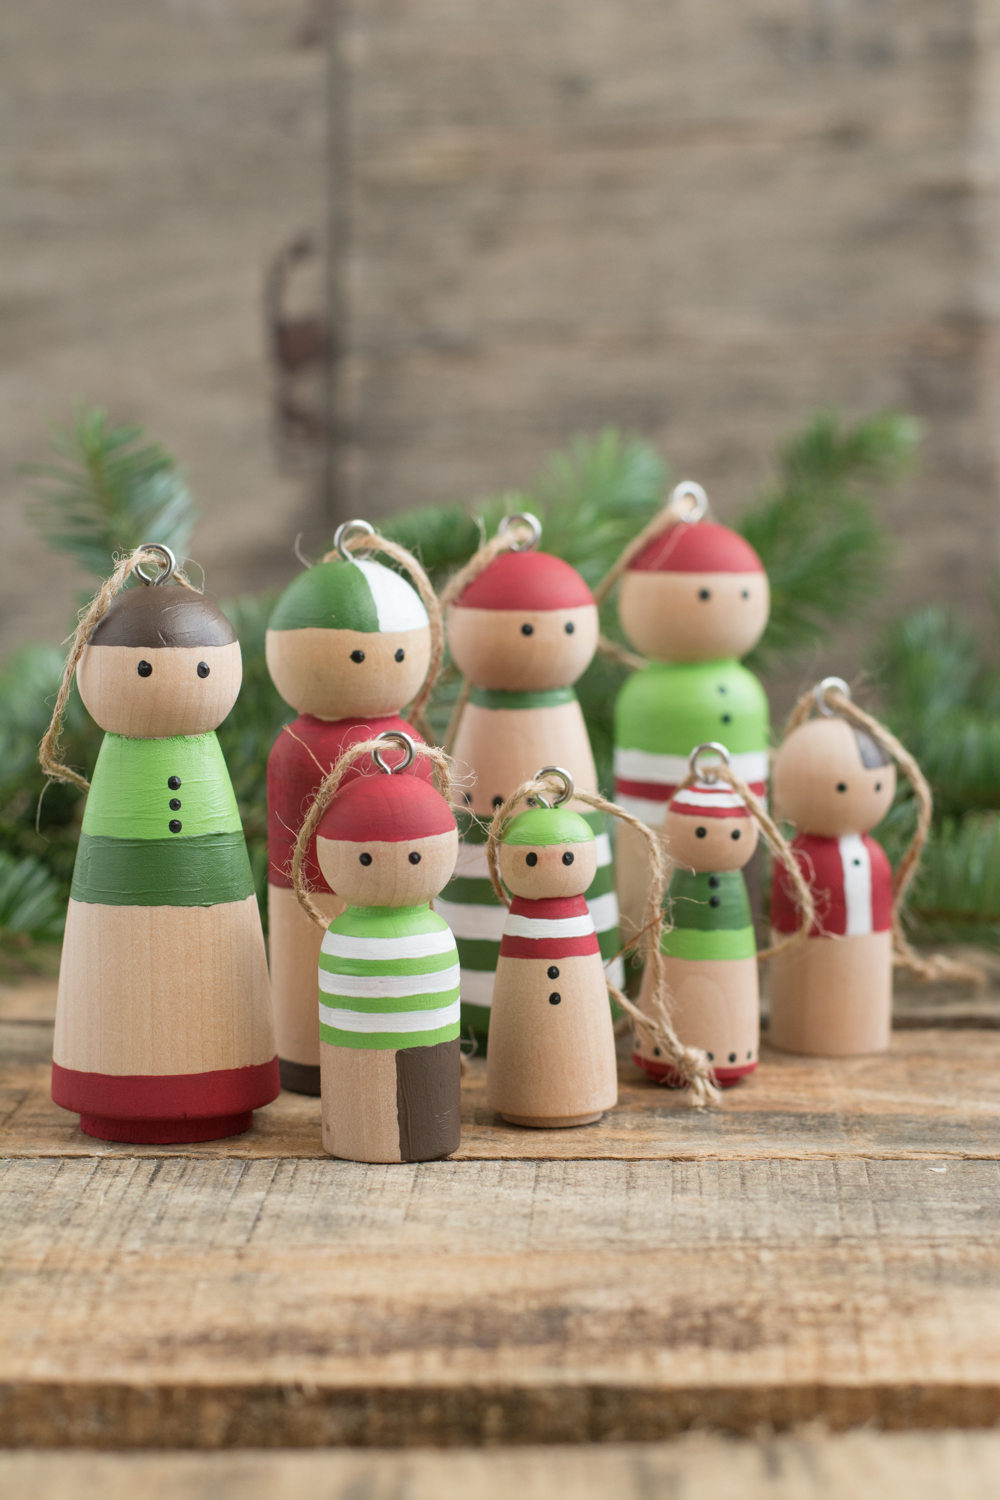 DIY: Wooden Peg Doll Ornaments — make a whole family!